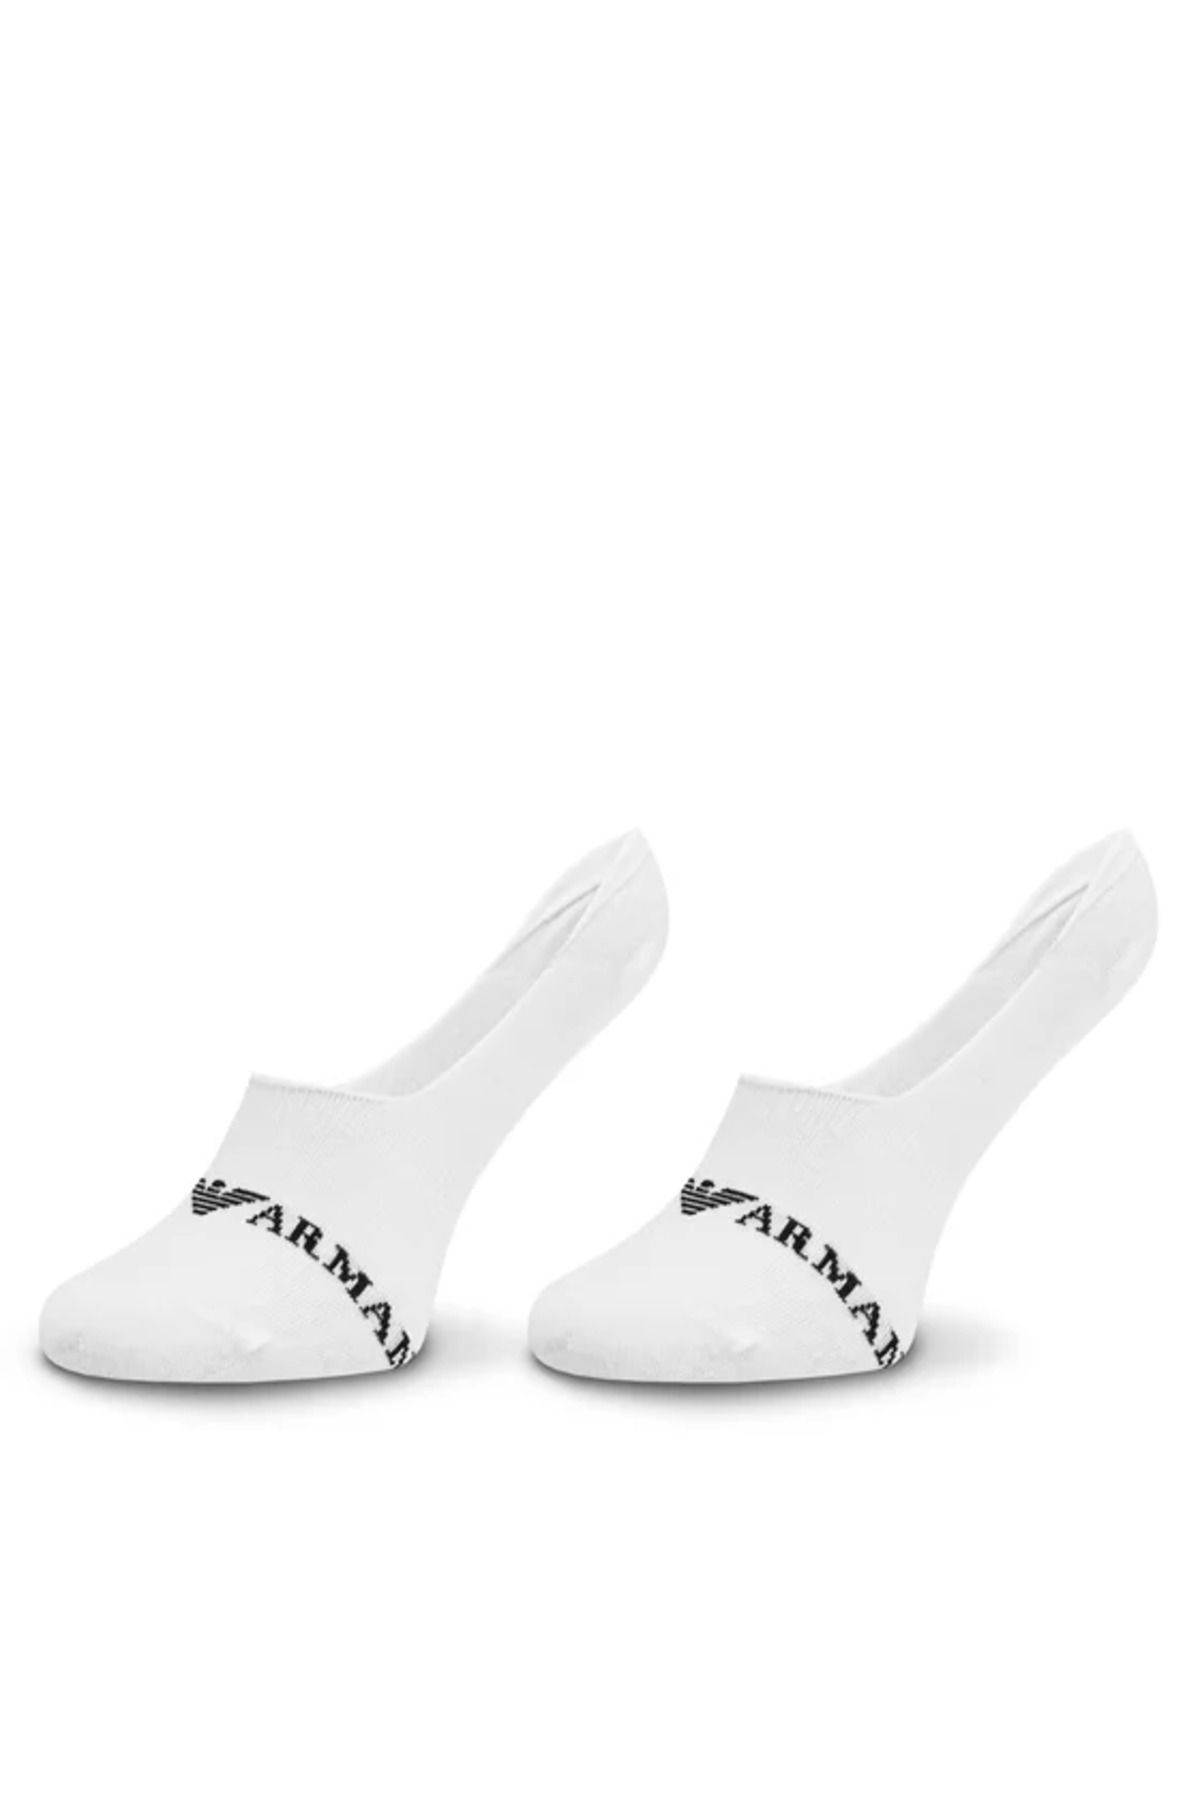 Emporio Armani Erkek 3'lü Paket Pamuklu Rahat Beyaz Çorap 306227 4R254-16510